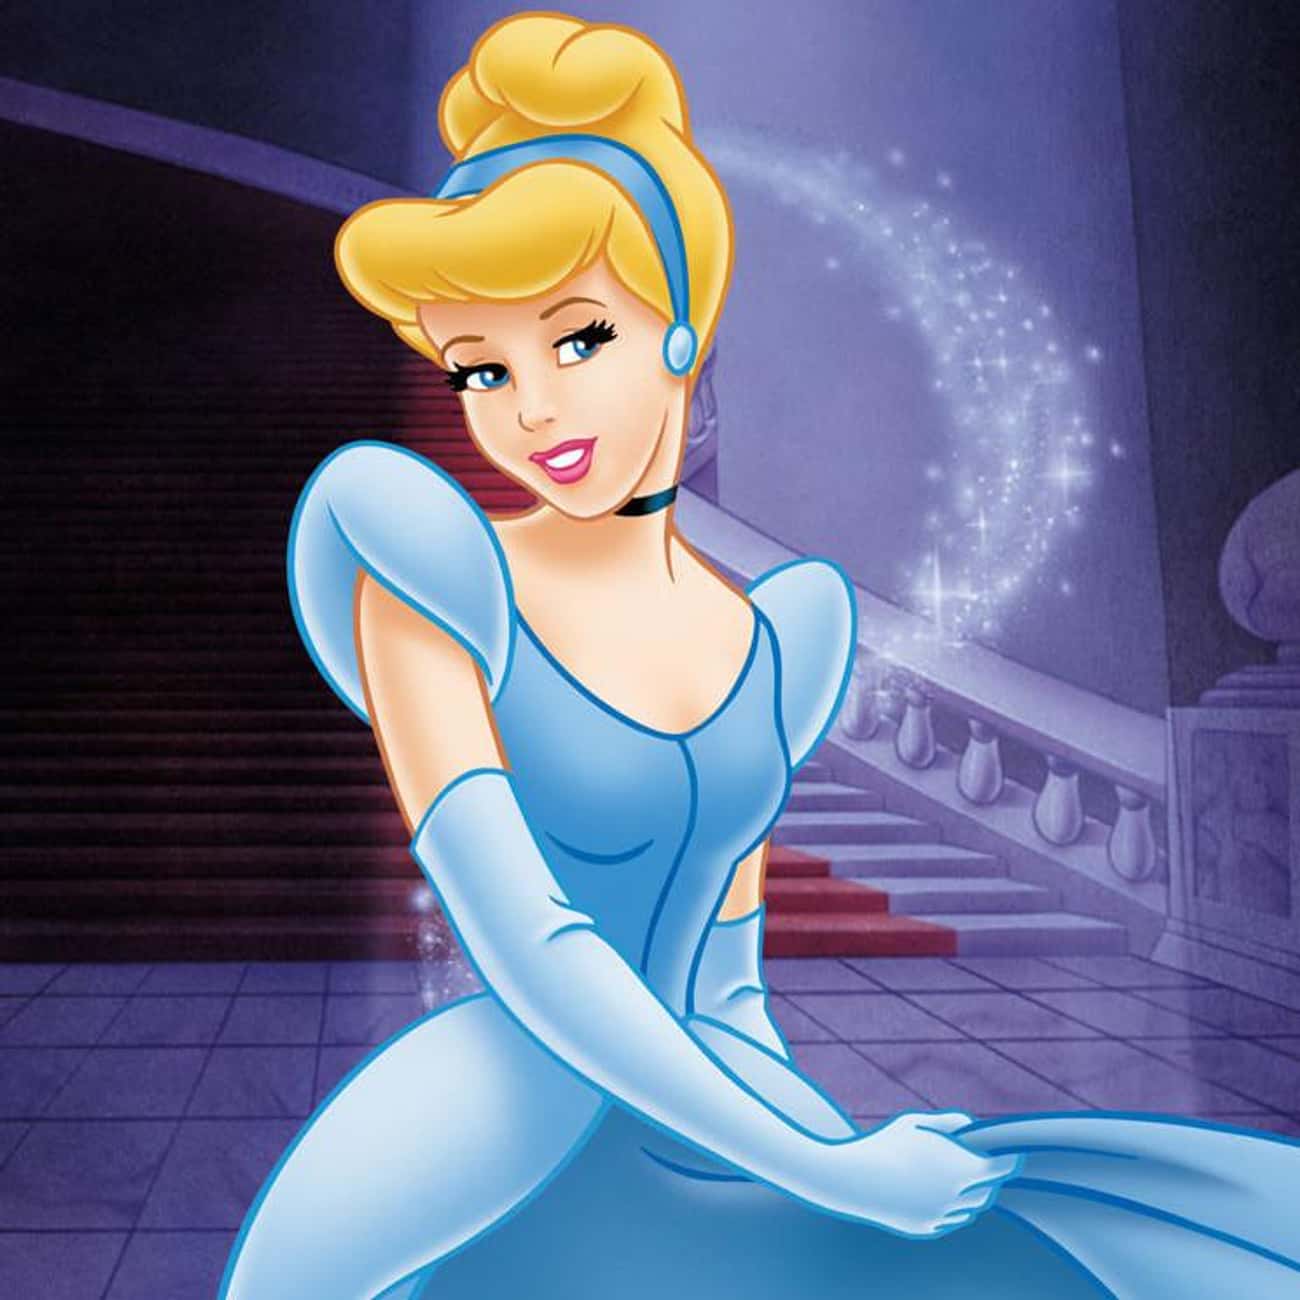 Cinderella am. Золушка Уолт Дисней. Принцессы Дисней Золушка. Синдерелла Золушка.